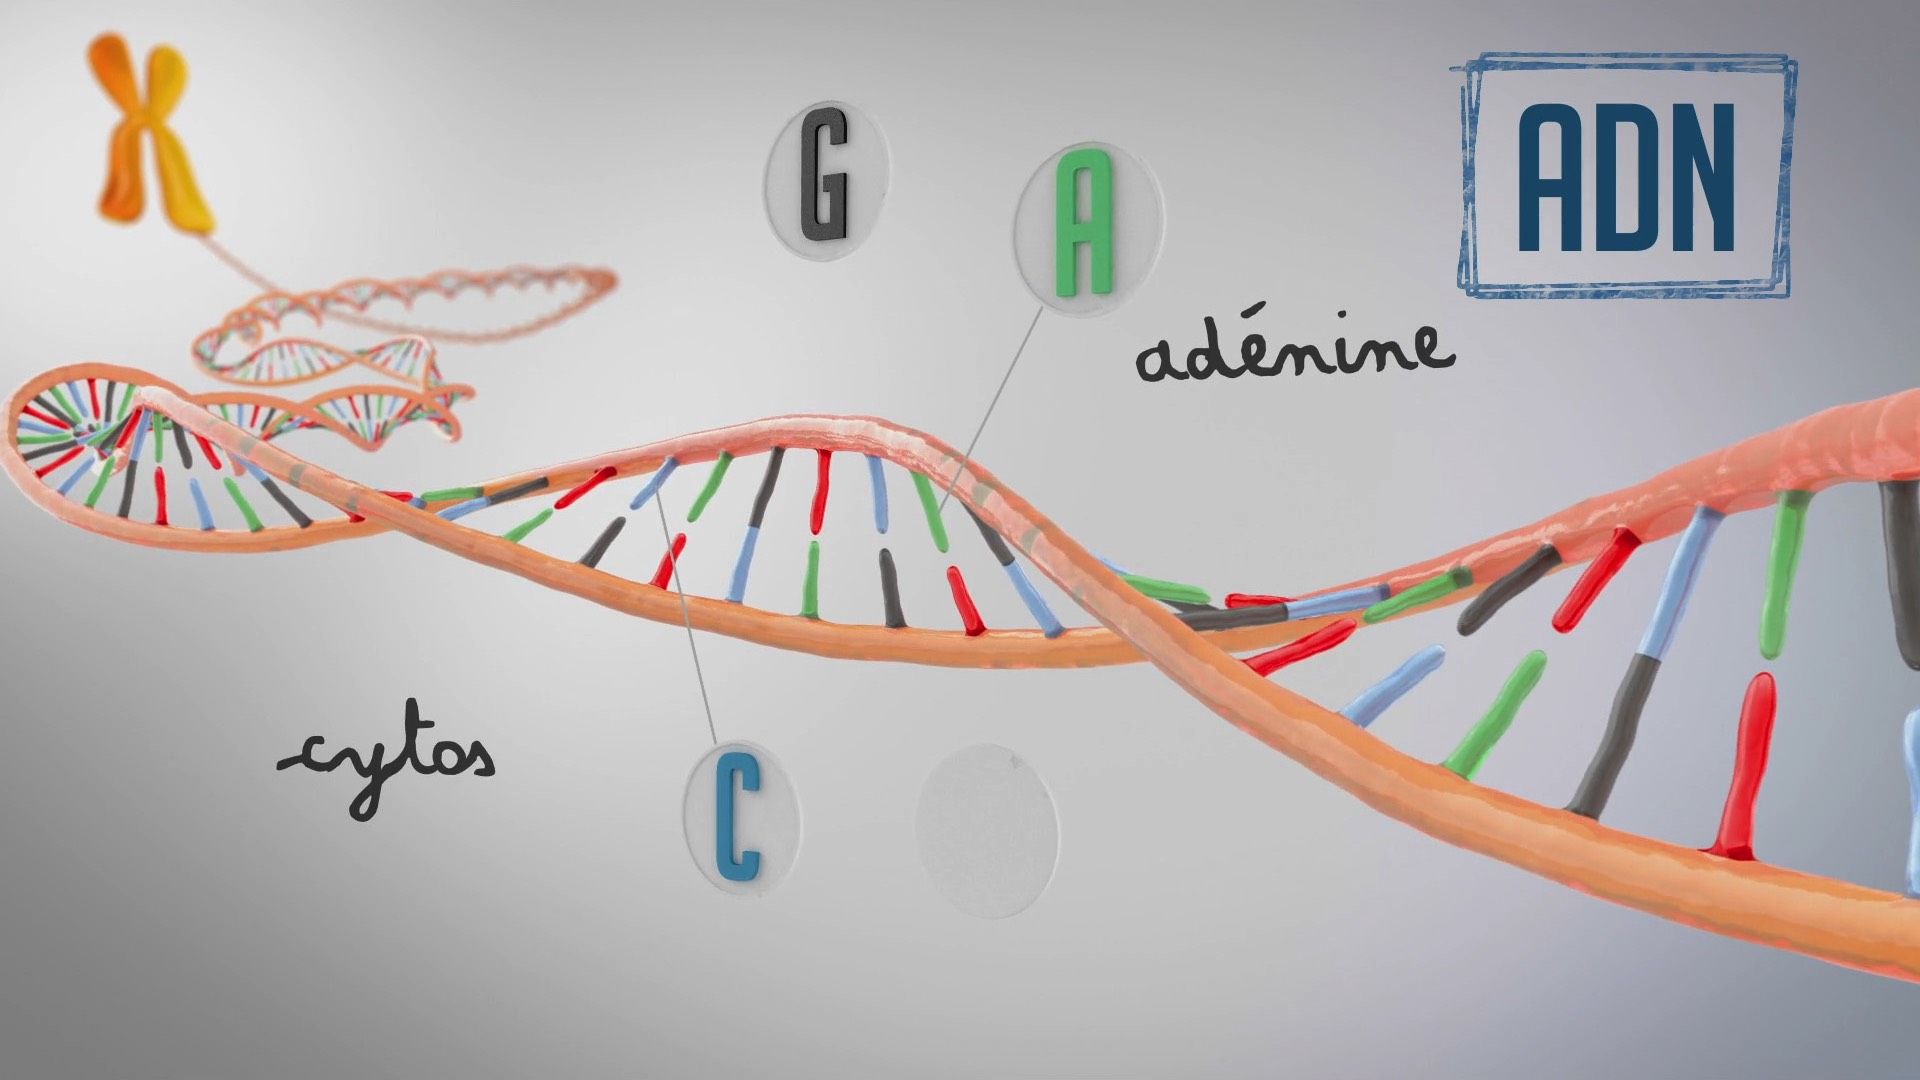 Genome - Director : Philippe Mayade / CG Artist : Arnaud Guillon-Cedric Poligne-Thierry Canon